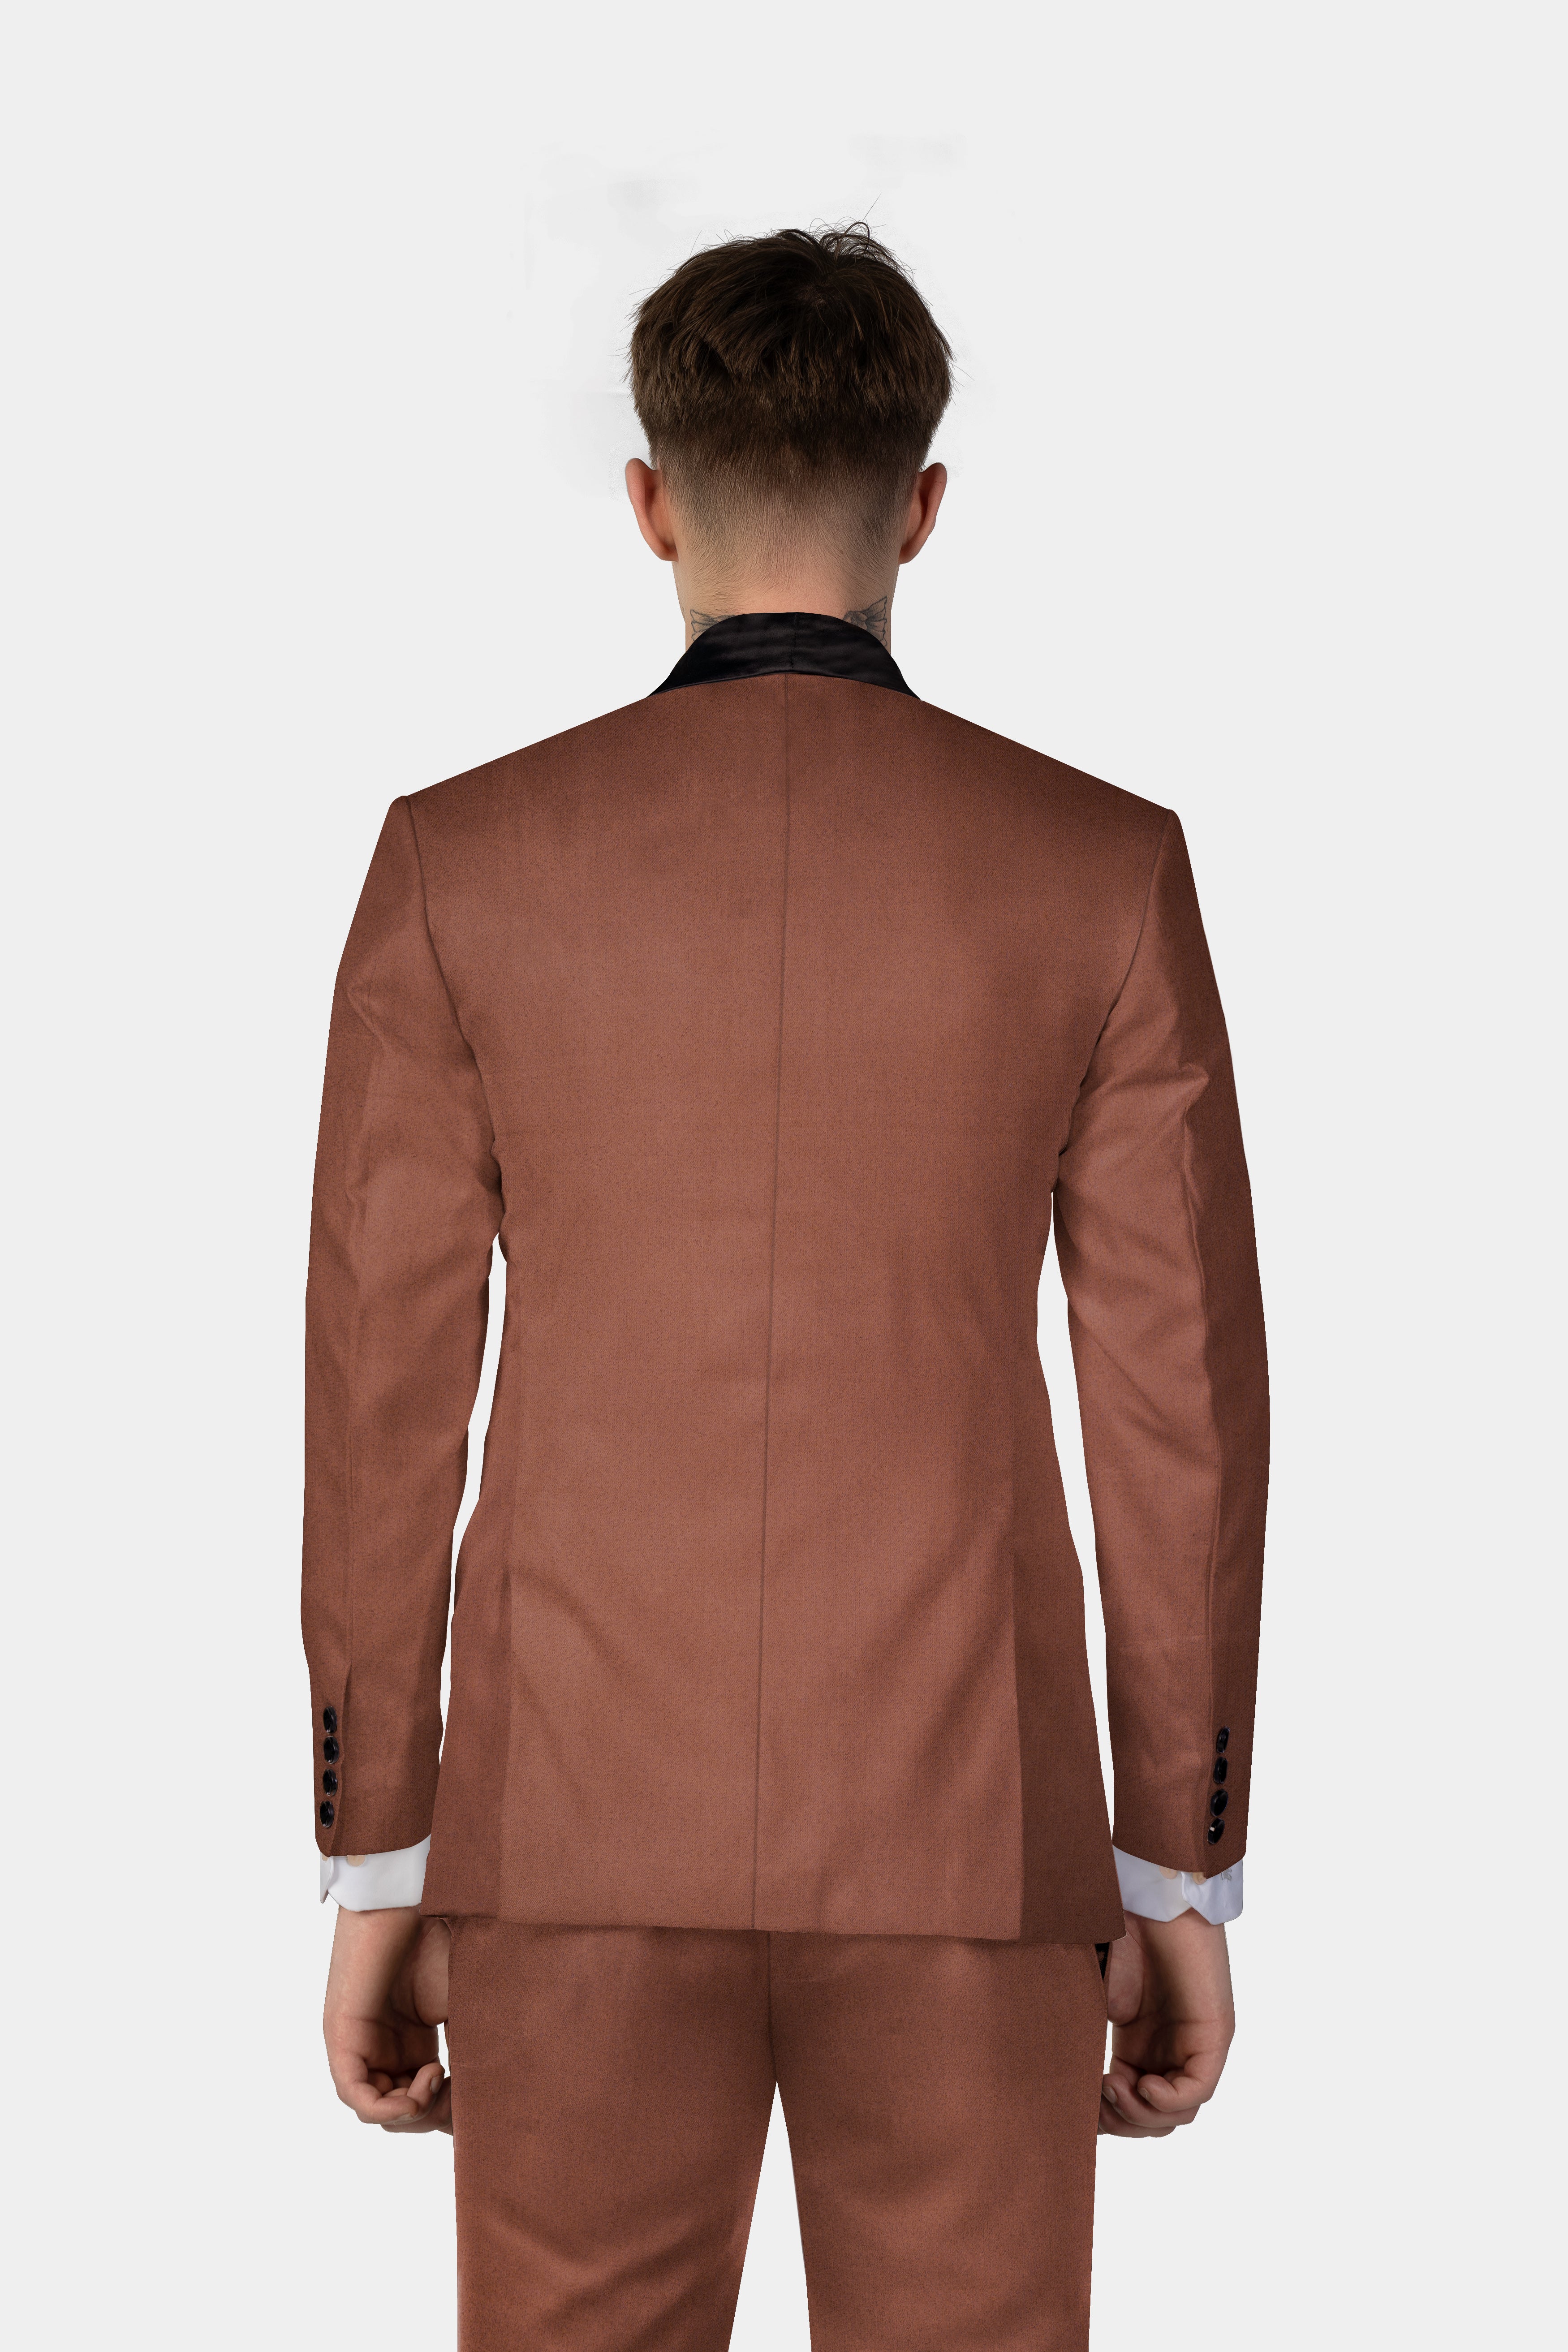 Palliser Brown Wool Rich Tuxedo Suit